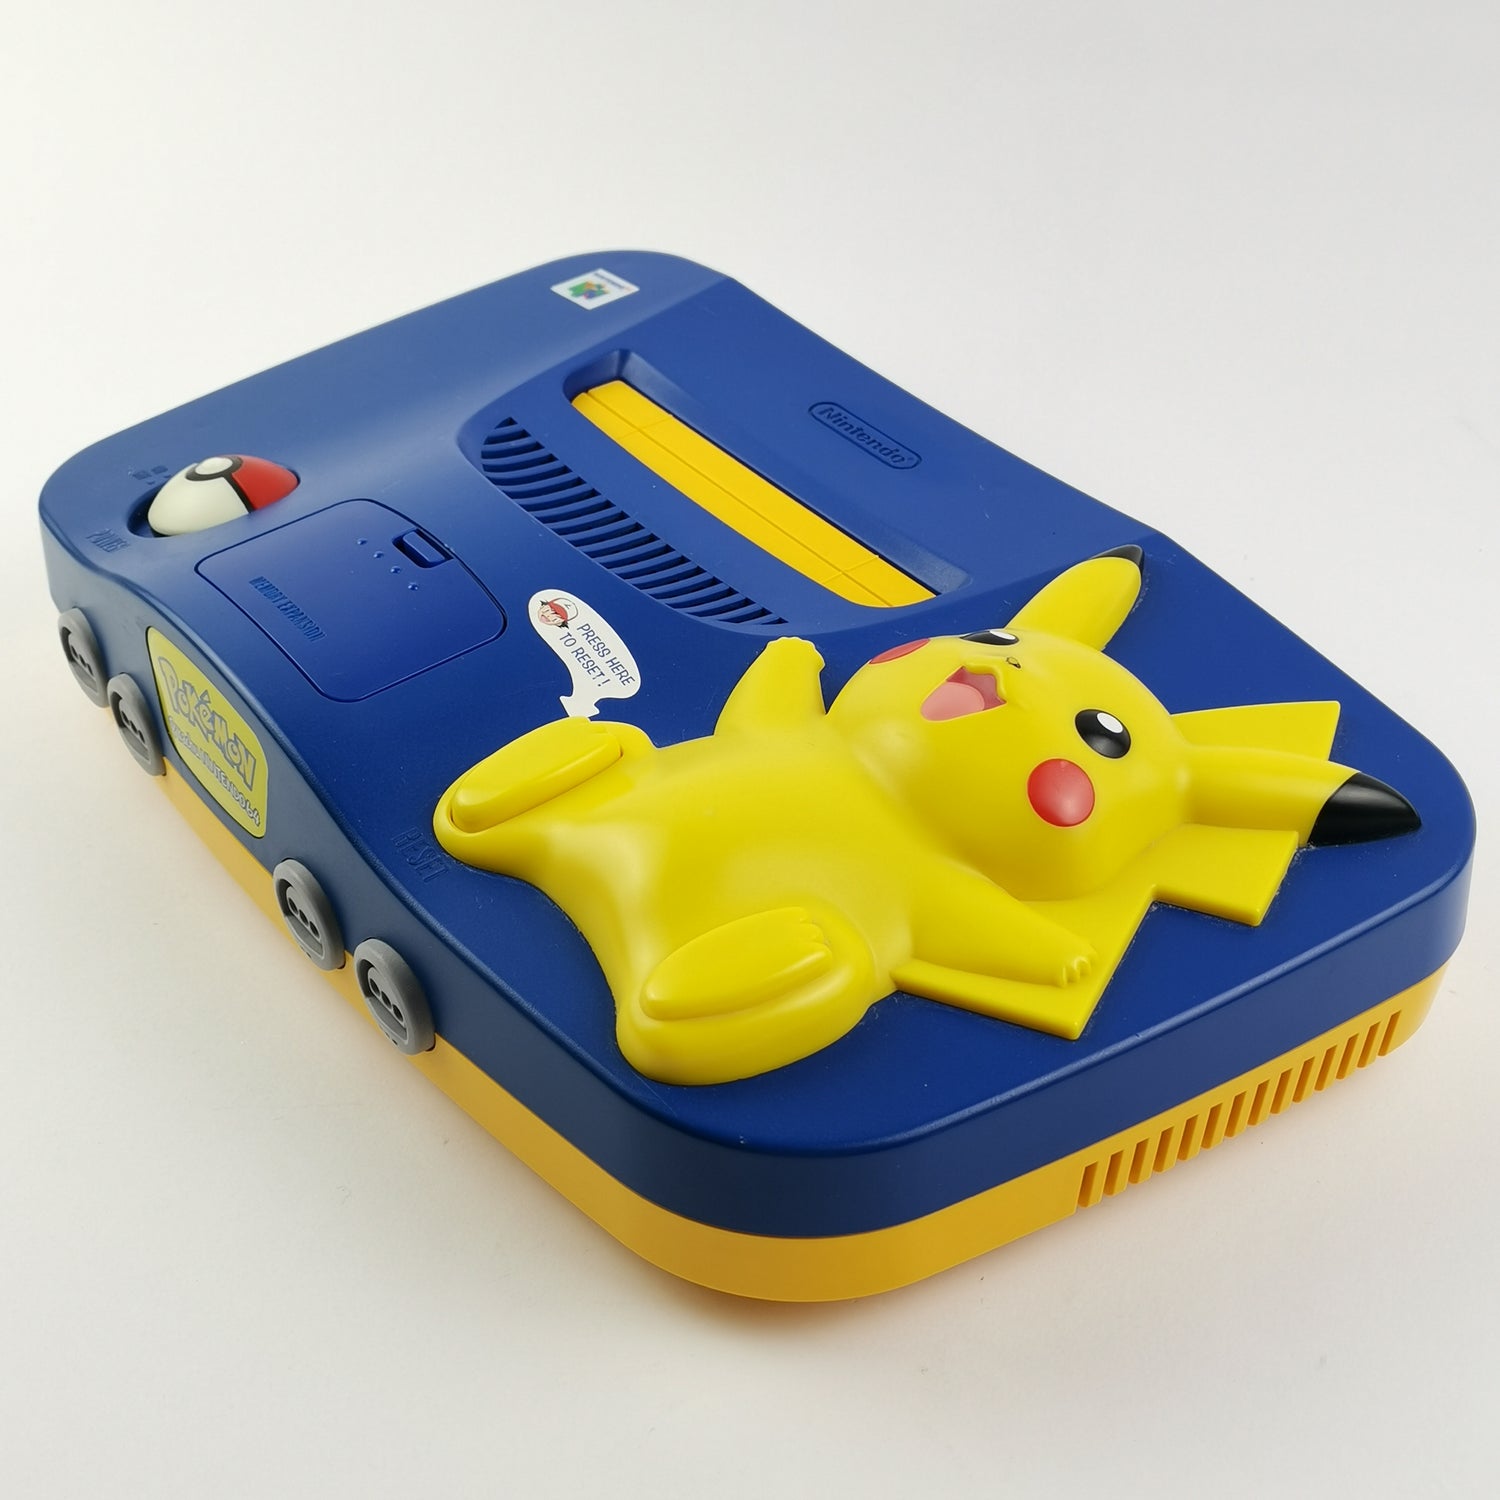 Nintendo 64 Konsole : Pikachu Edition mit Expansion Pack - N64 Console PAL